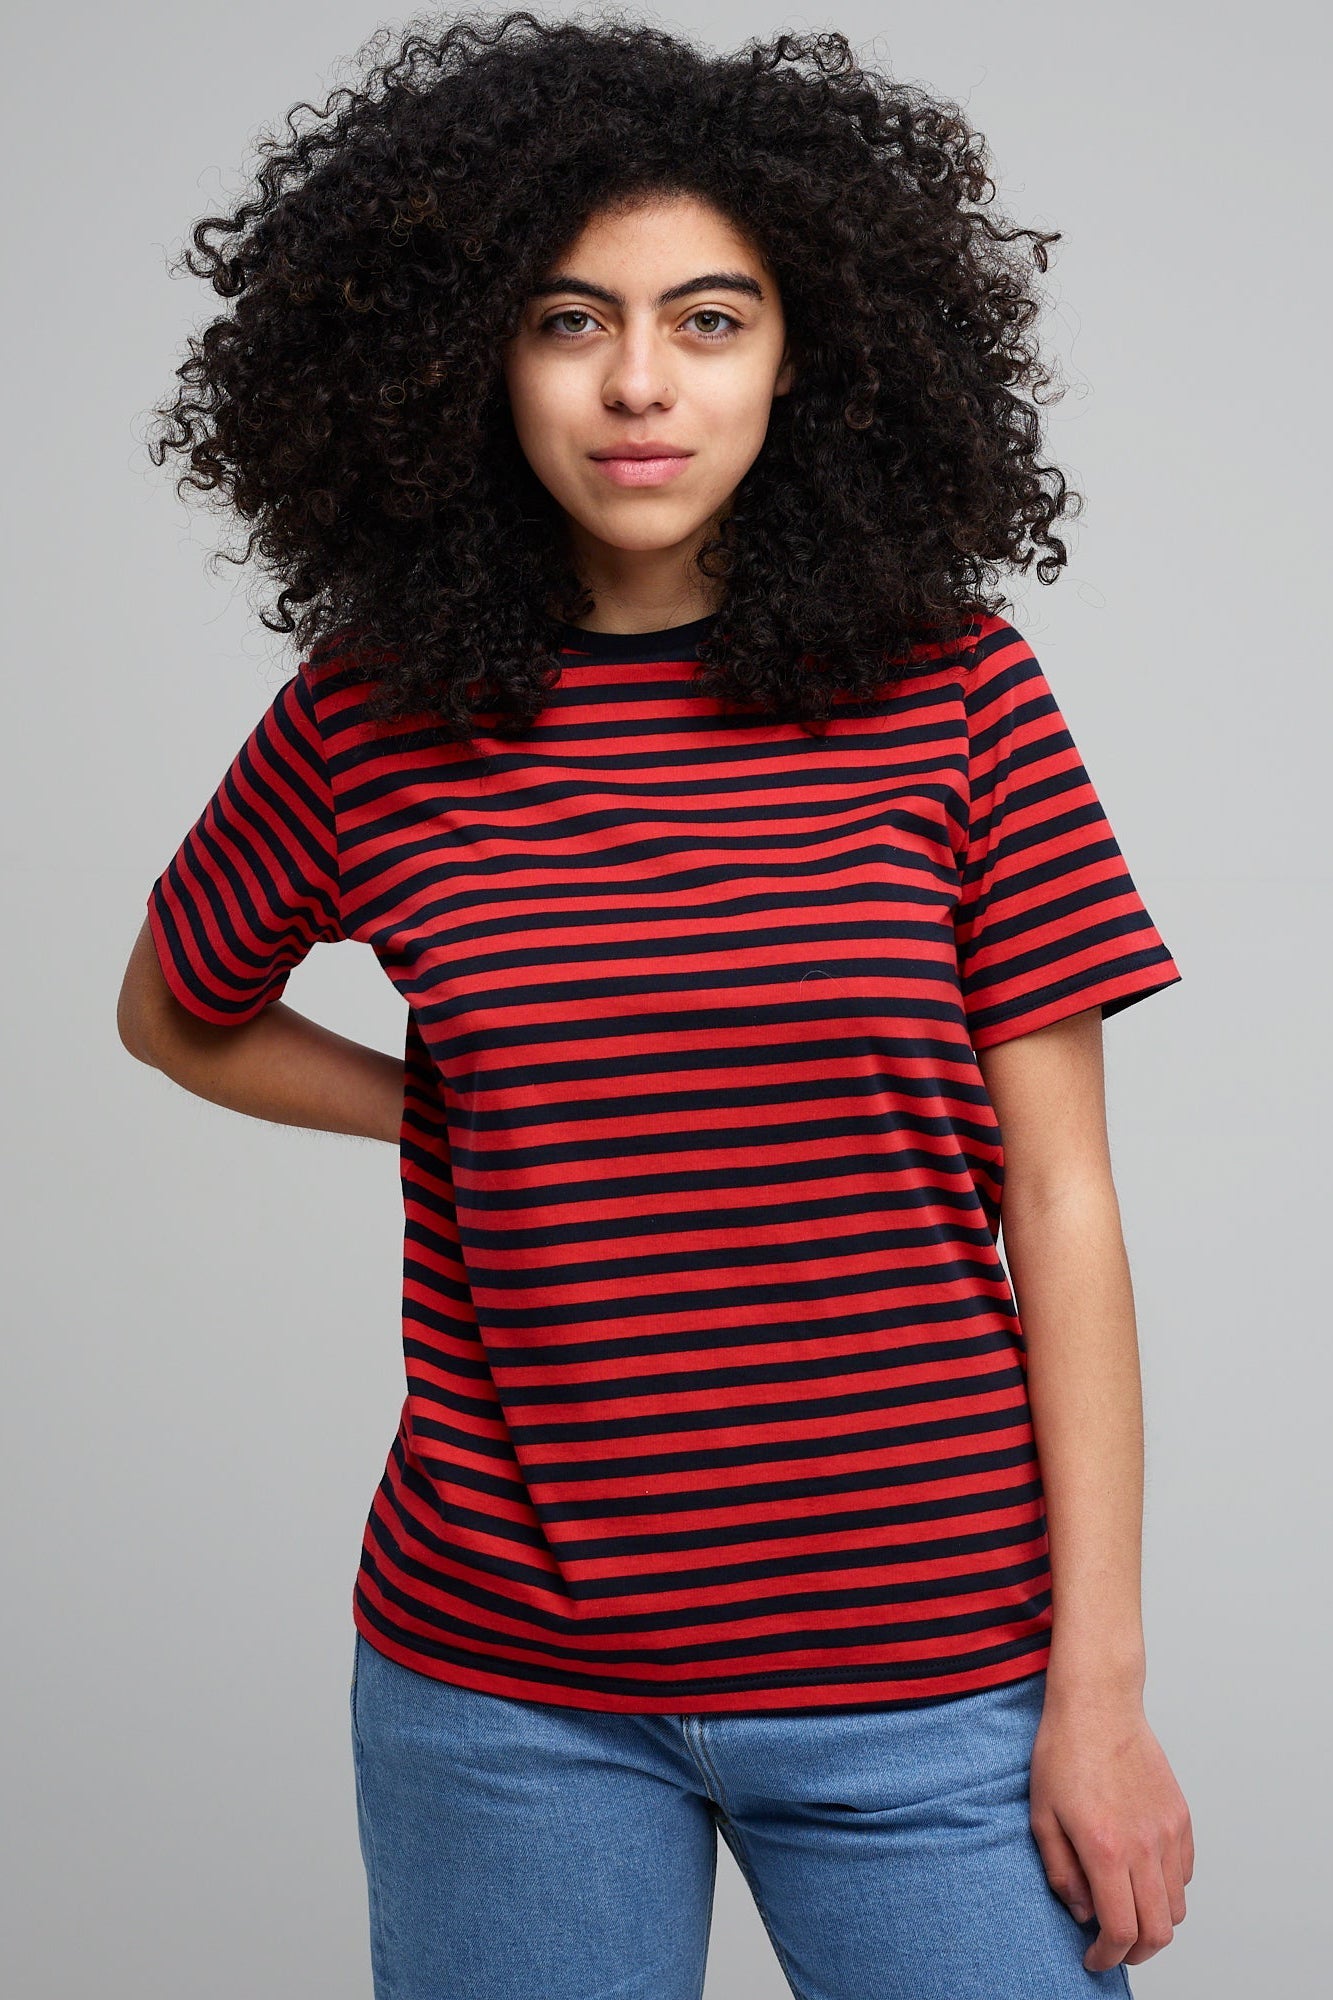 Women's Short Sleeve Navy/Red Striped T Shirt - Community Clothing